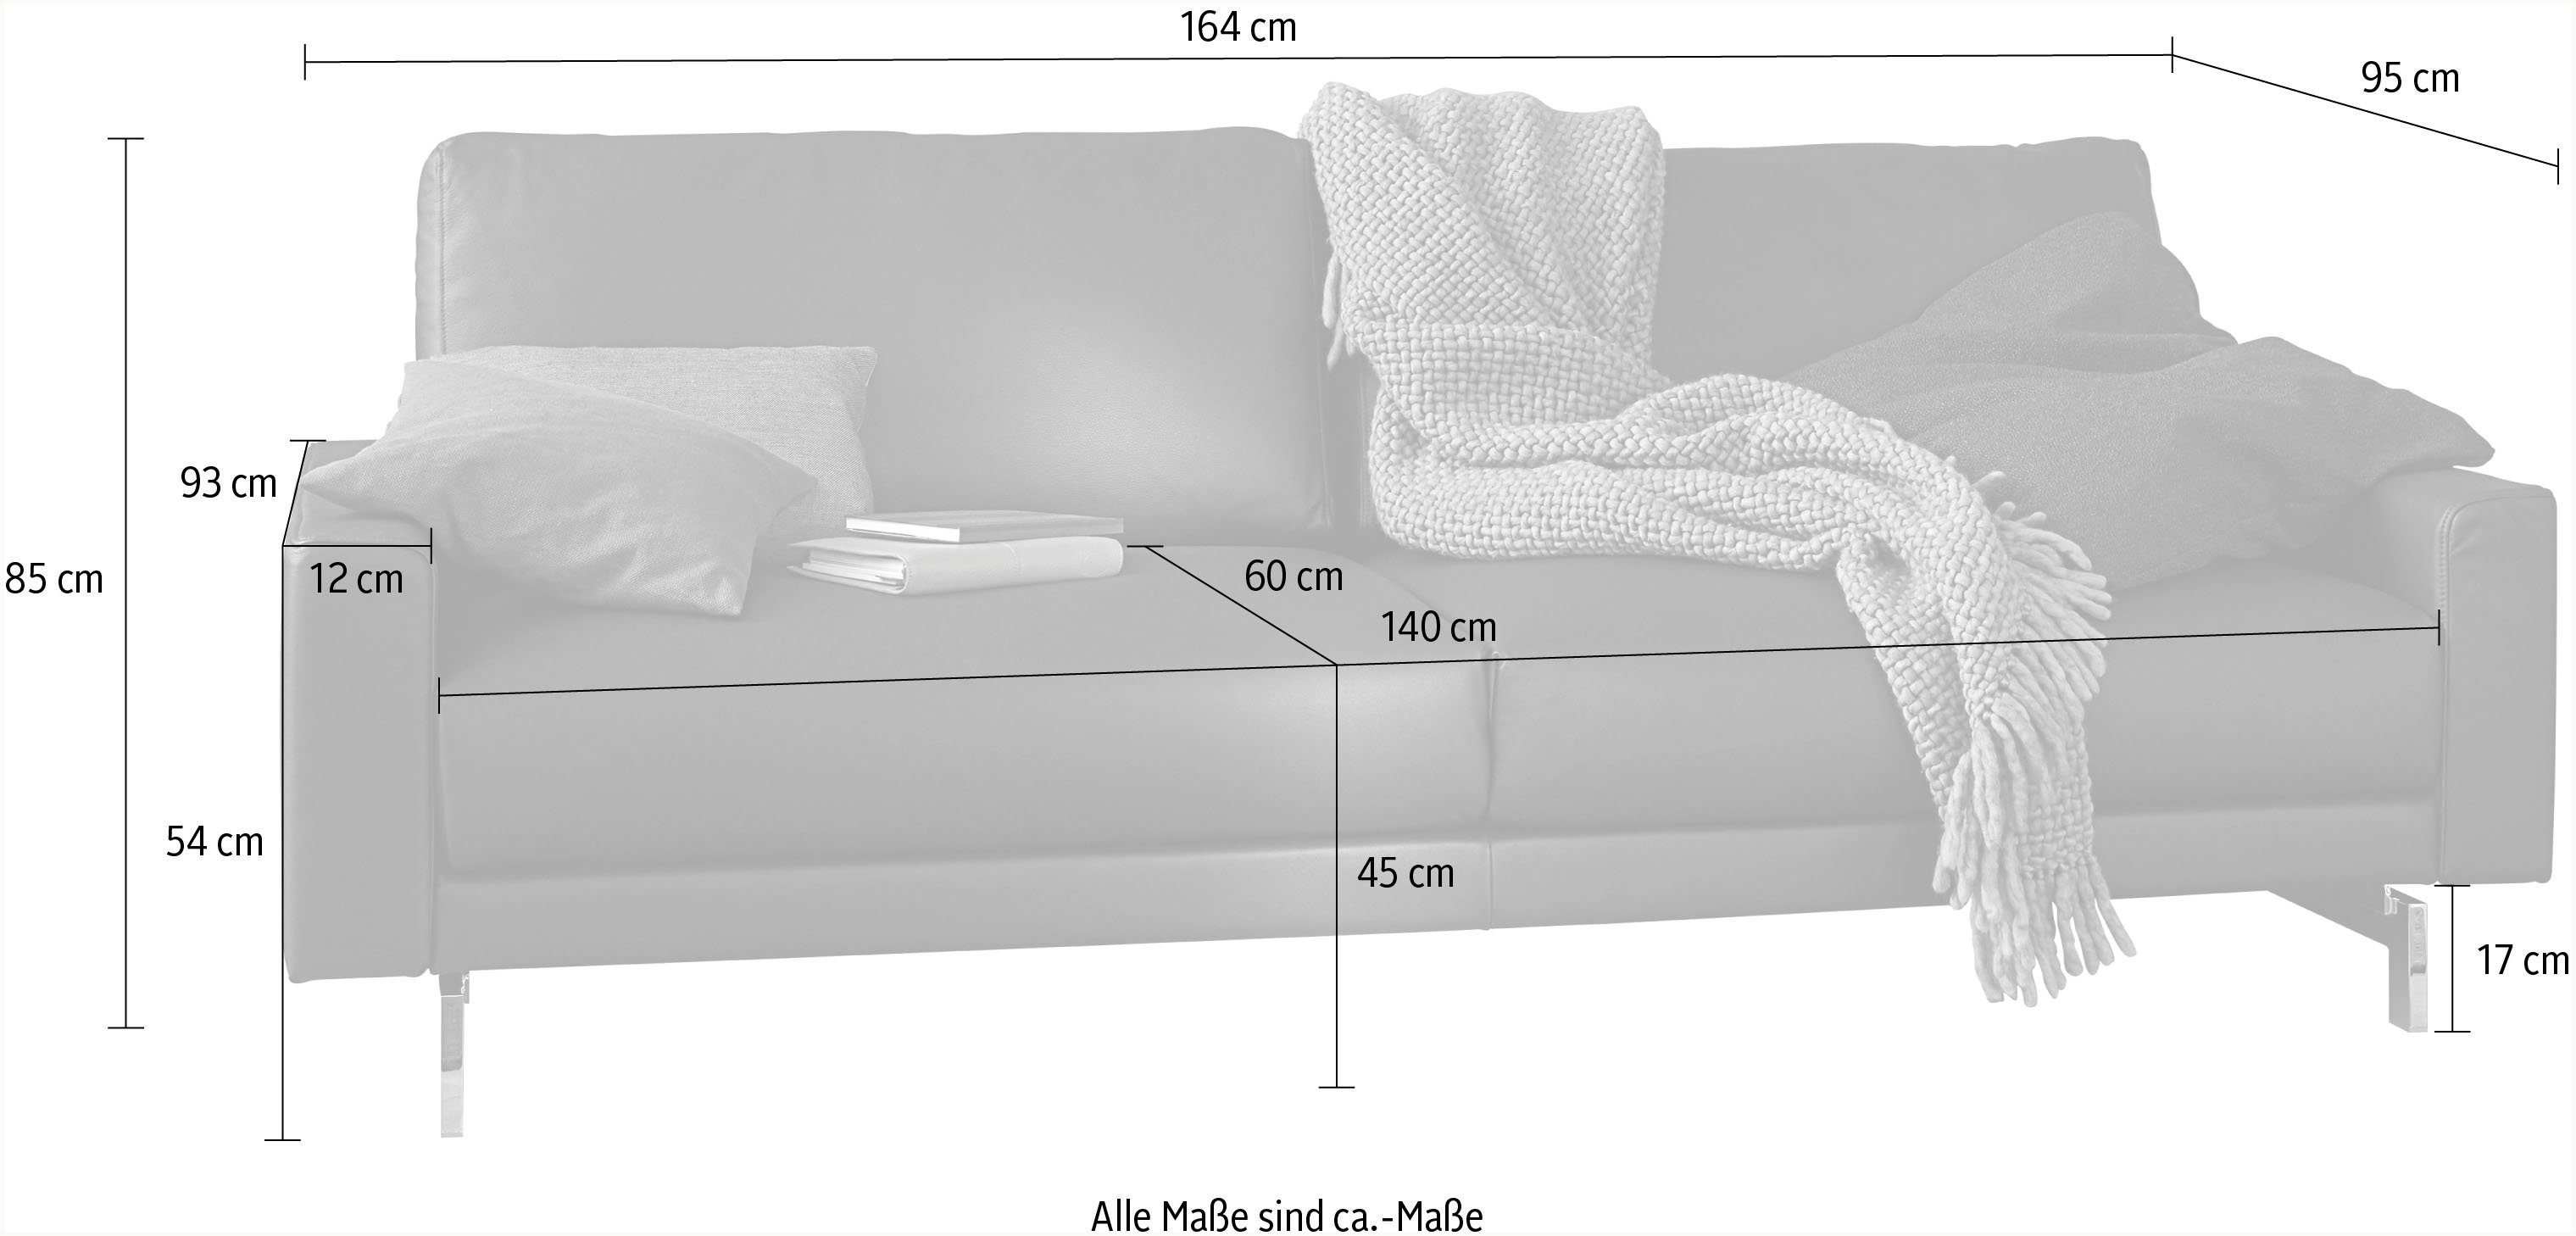 hs.450, Fuß niedrig, 2-Sitzer Armlehne 164 cm sofa Breite glänzend, chromfarben hülsta